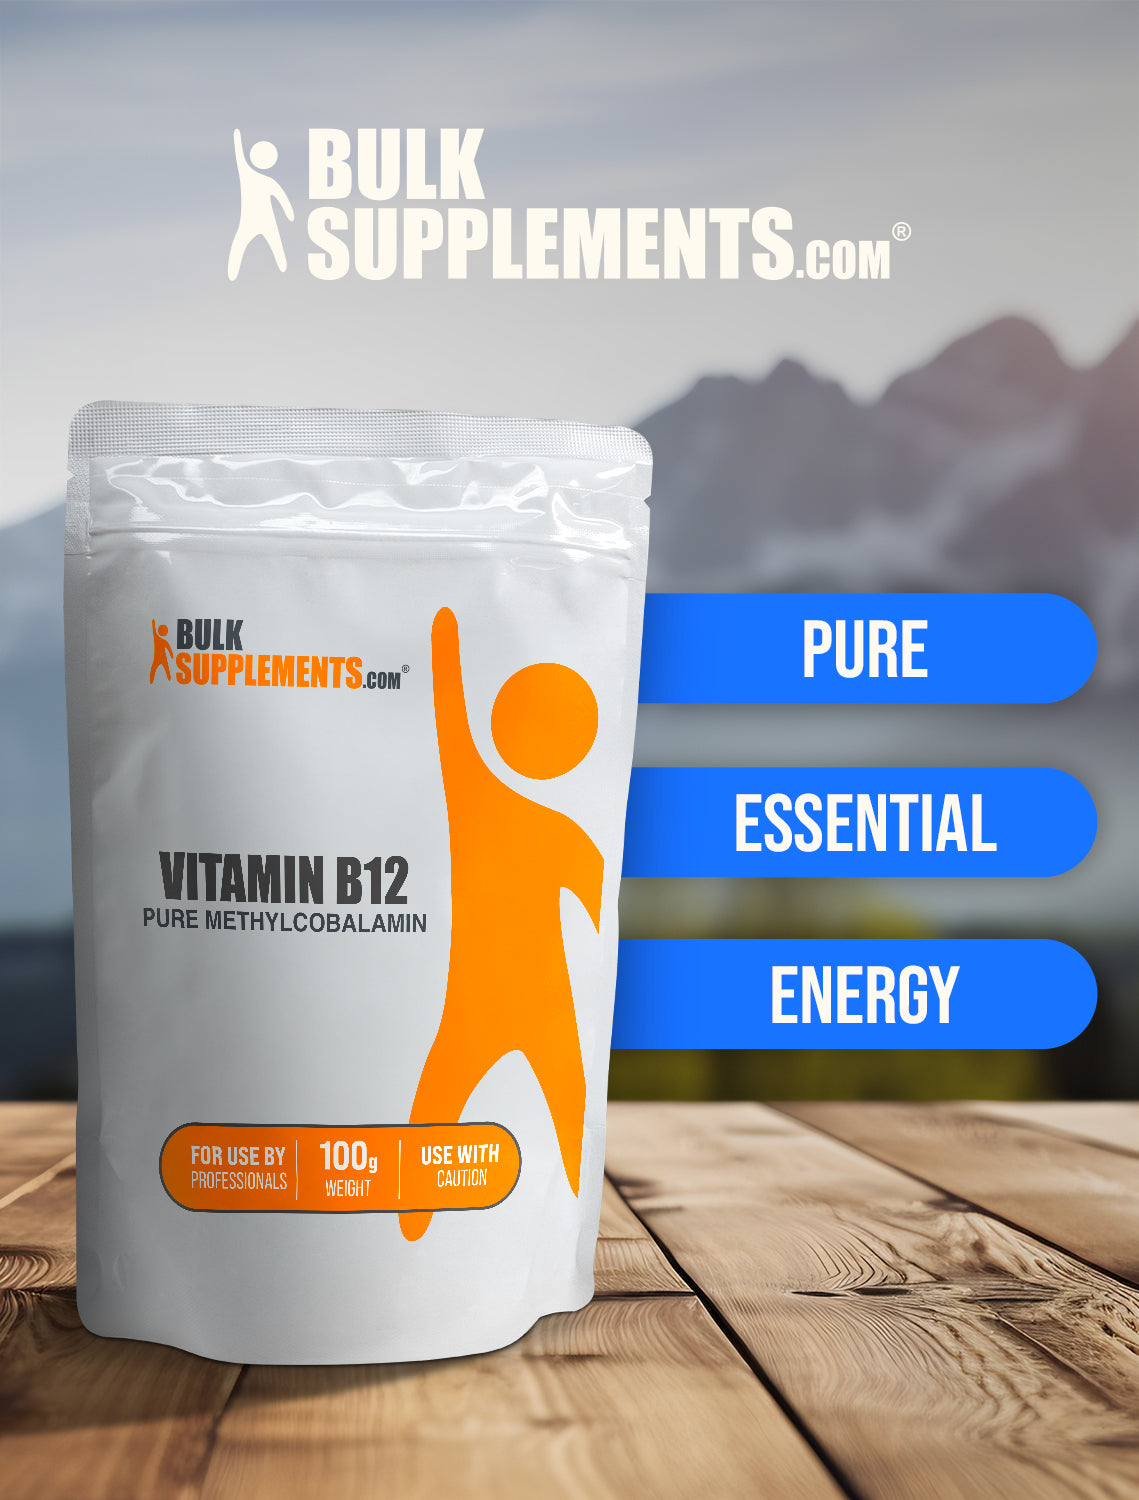 Vitamin B12 Pure Methylcobalamin powder keyword image 100g